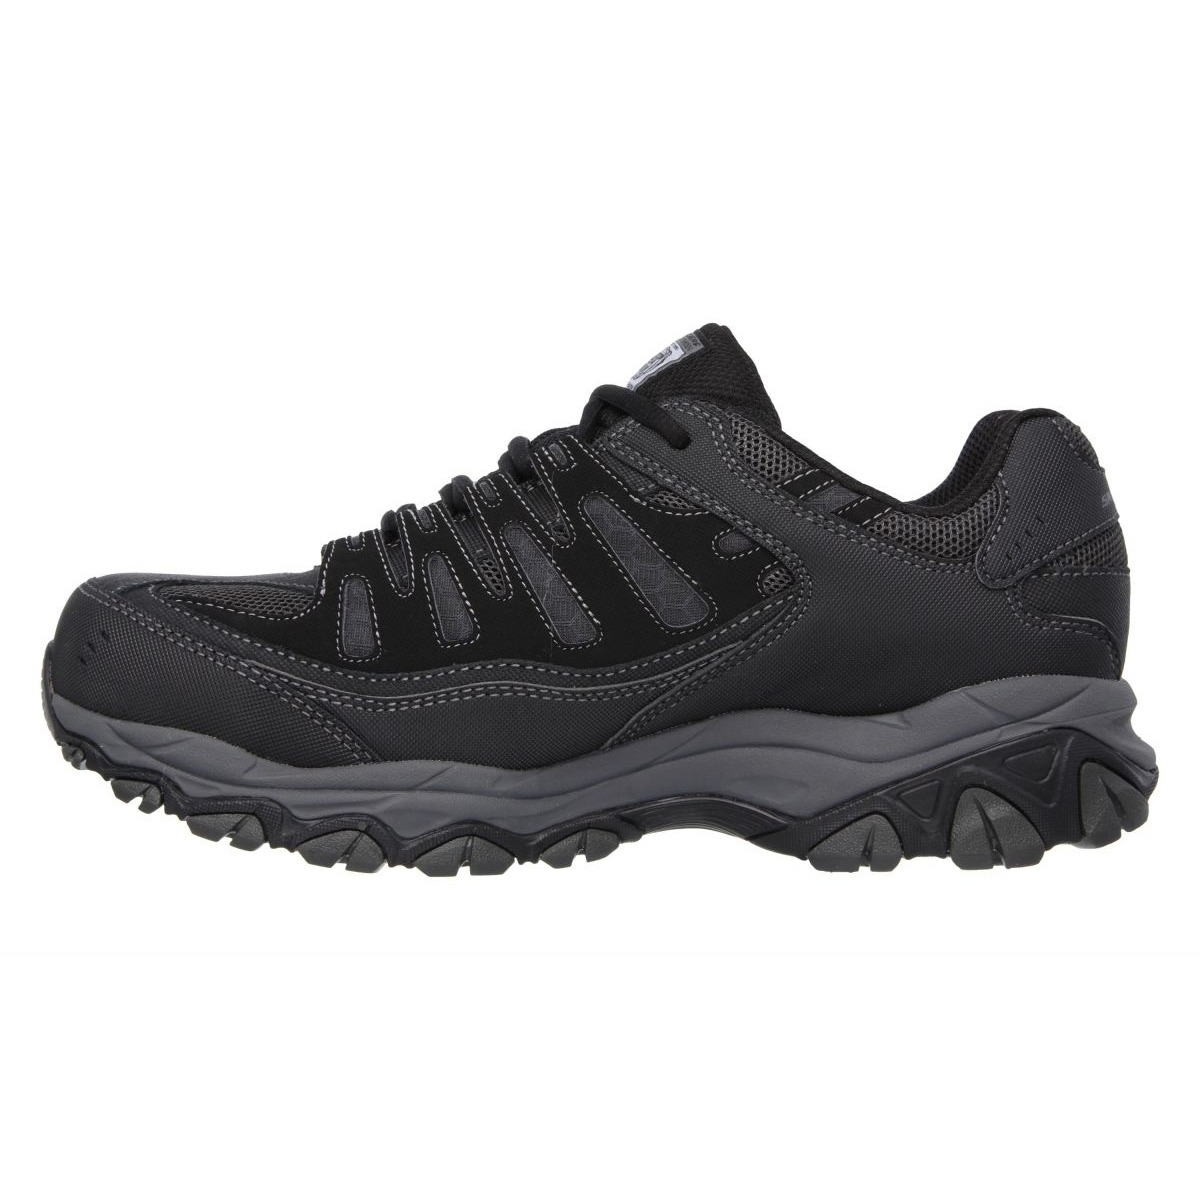 Skechers Men's Cankton-U Industrial Shoe 7 BLACK/CHARCOAL - BLACK/CHARCOAL, 10 Wide